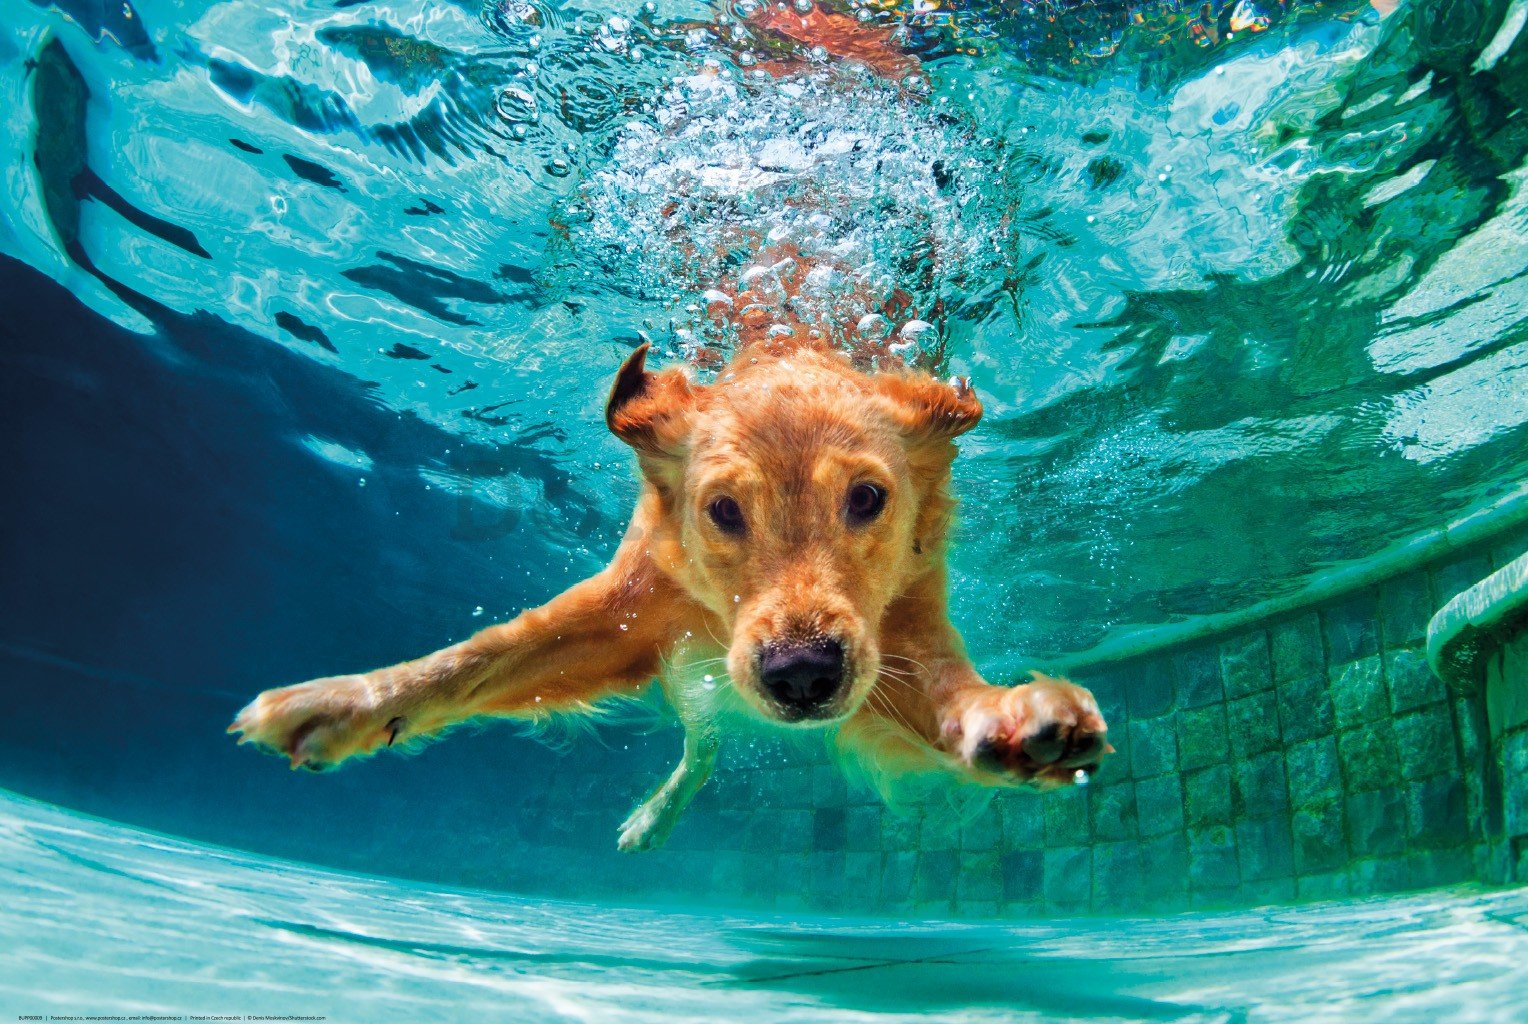 Plagát: Pes pod vodou